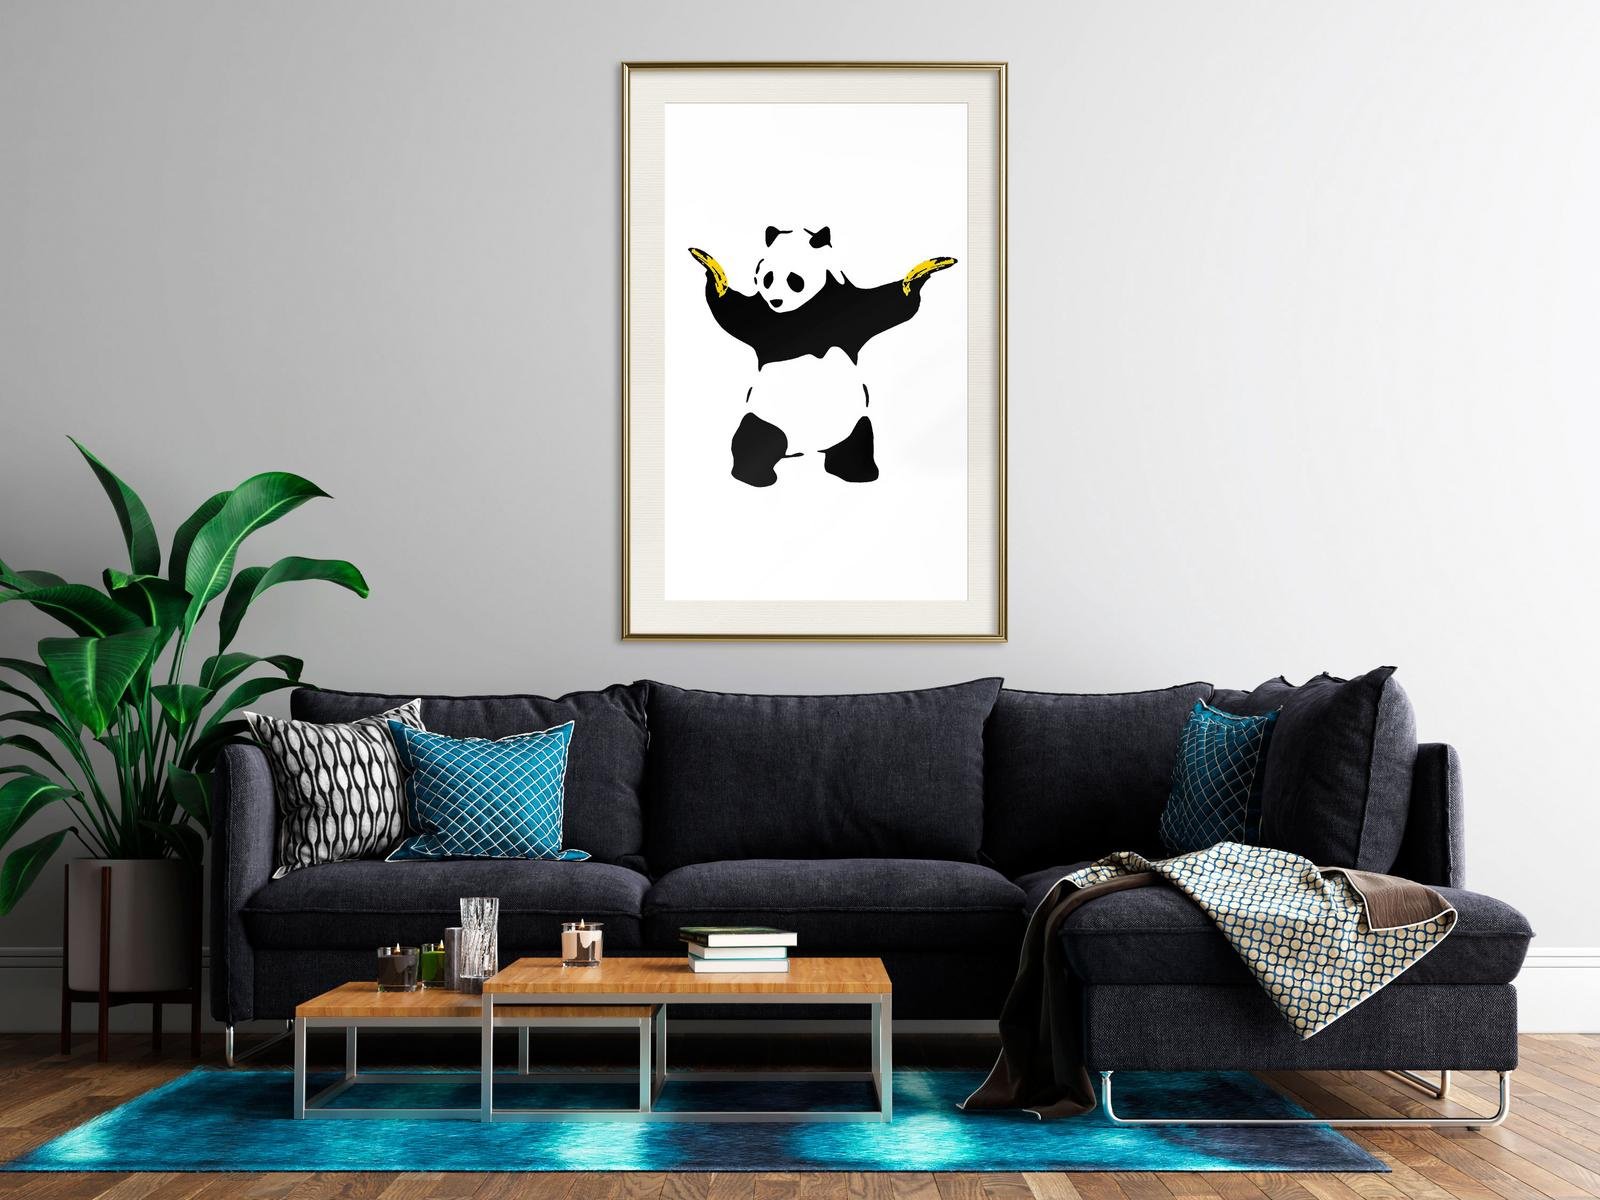 Poster Banksy panda with guns